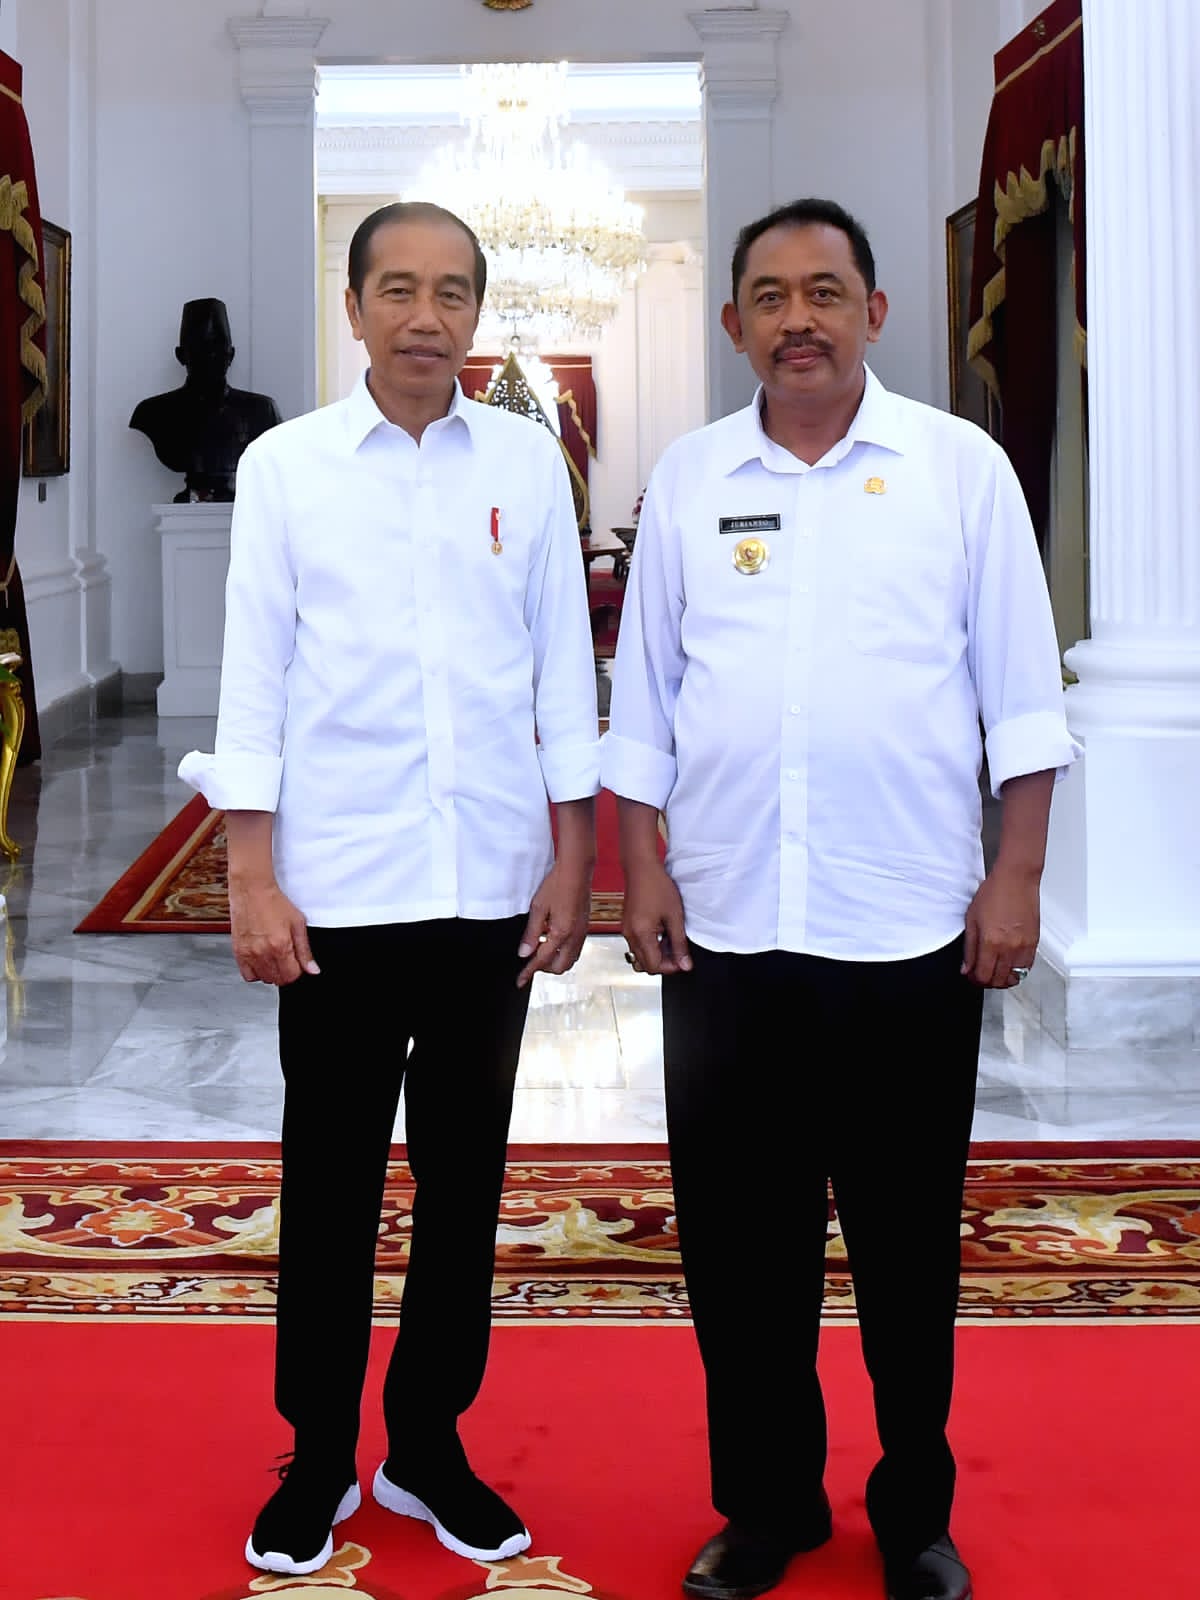 Ikut Hadir Bertemu Jokowi, Jurianto Pastikan Kades se-Jatim Netral